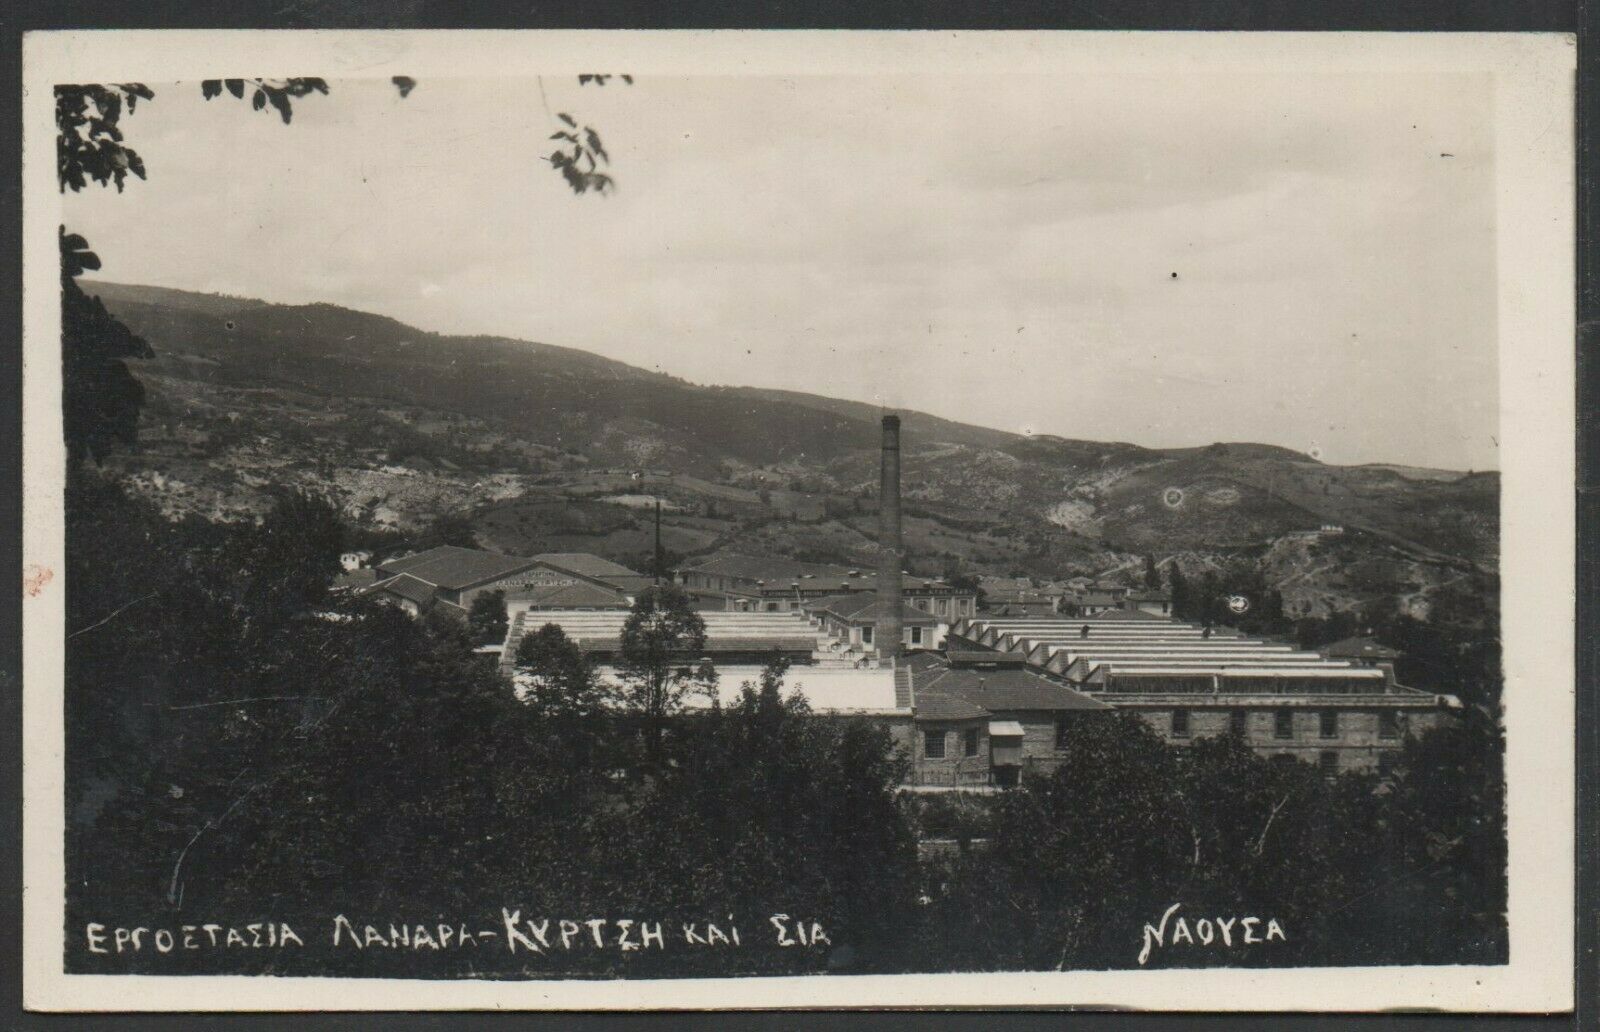 D024 Greece / Macedonia Naoussa 1924 εργοστάσια κλωστοϋφαντουργίας Λαναρά-Κύρτση